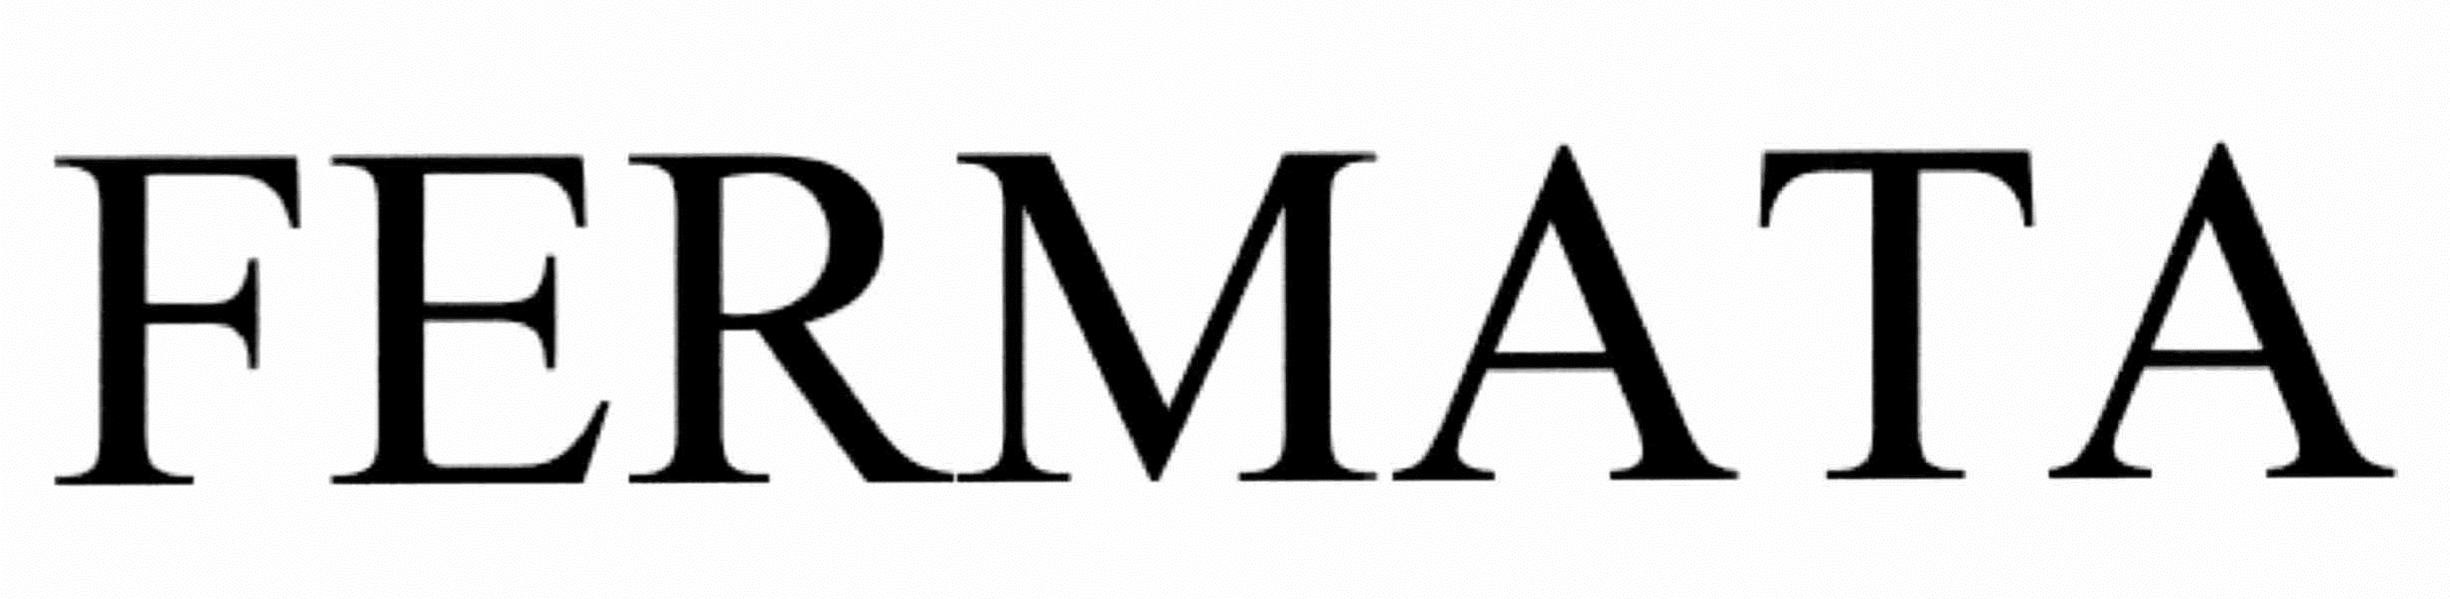 Trademark Logo FERMATA